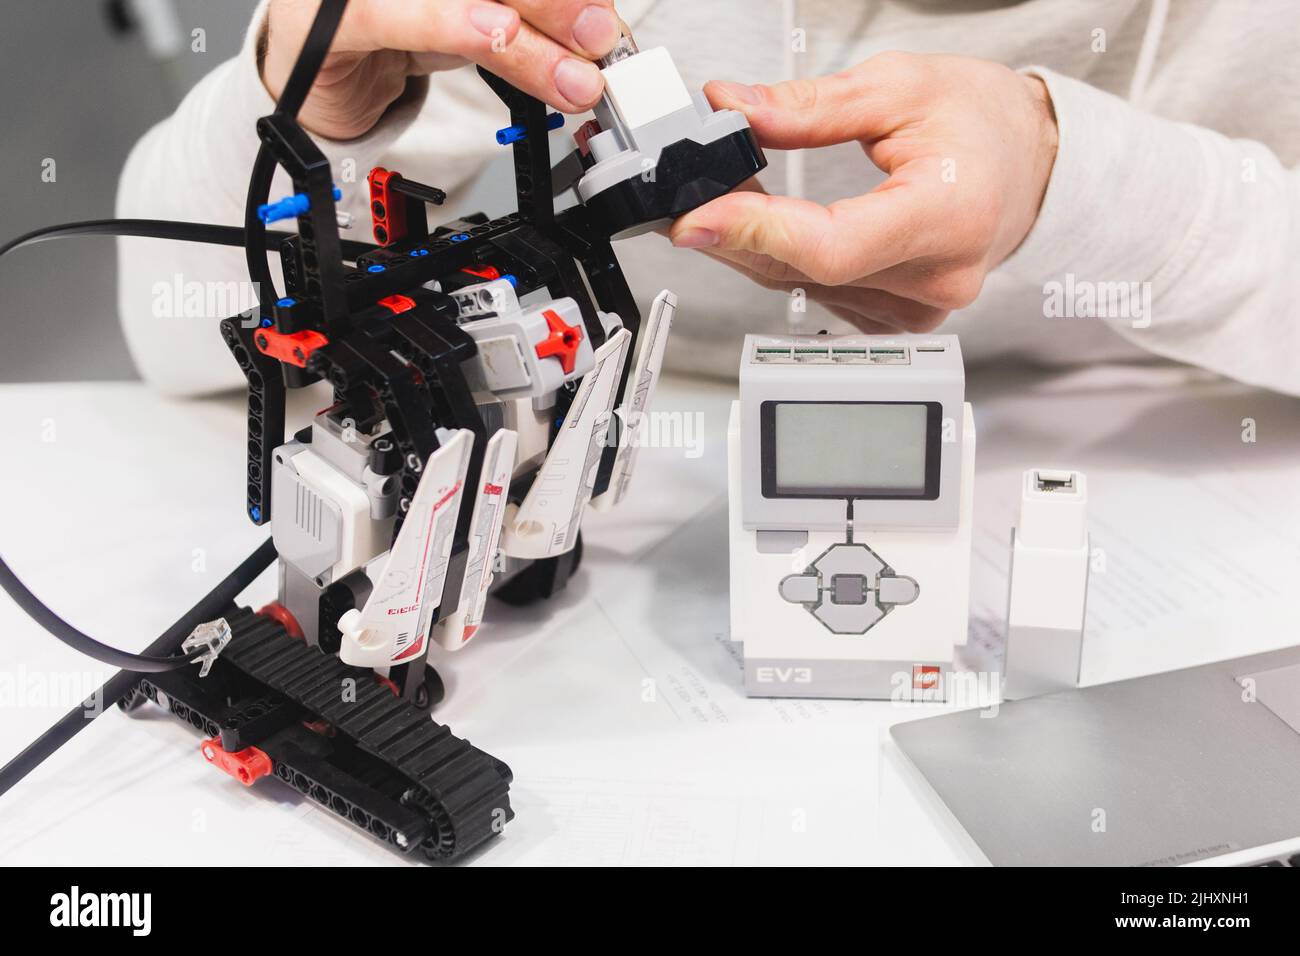 Lego Eve robotics mechatronics assembly concept Stock Photo